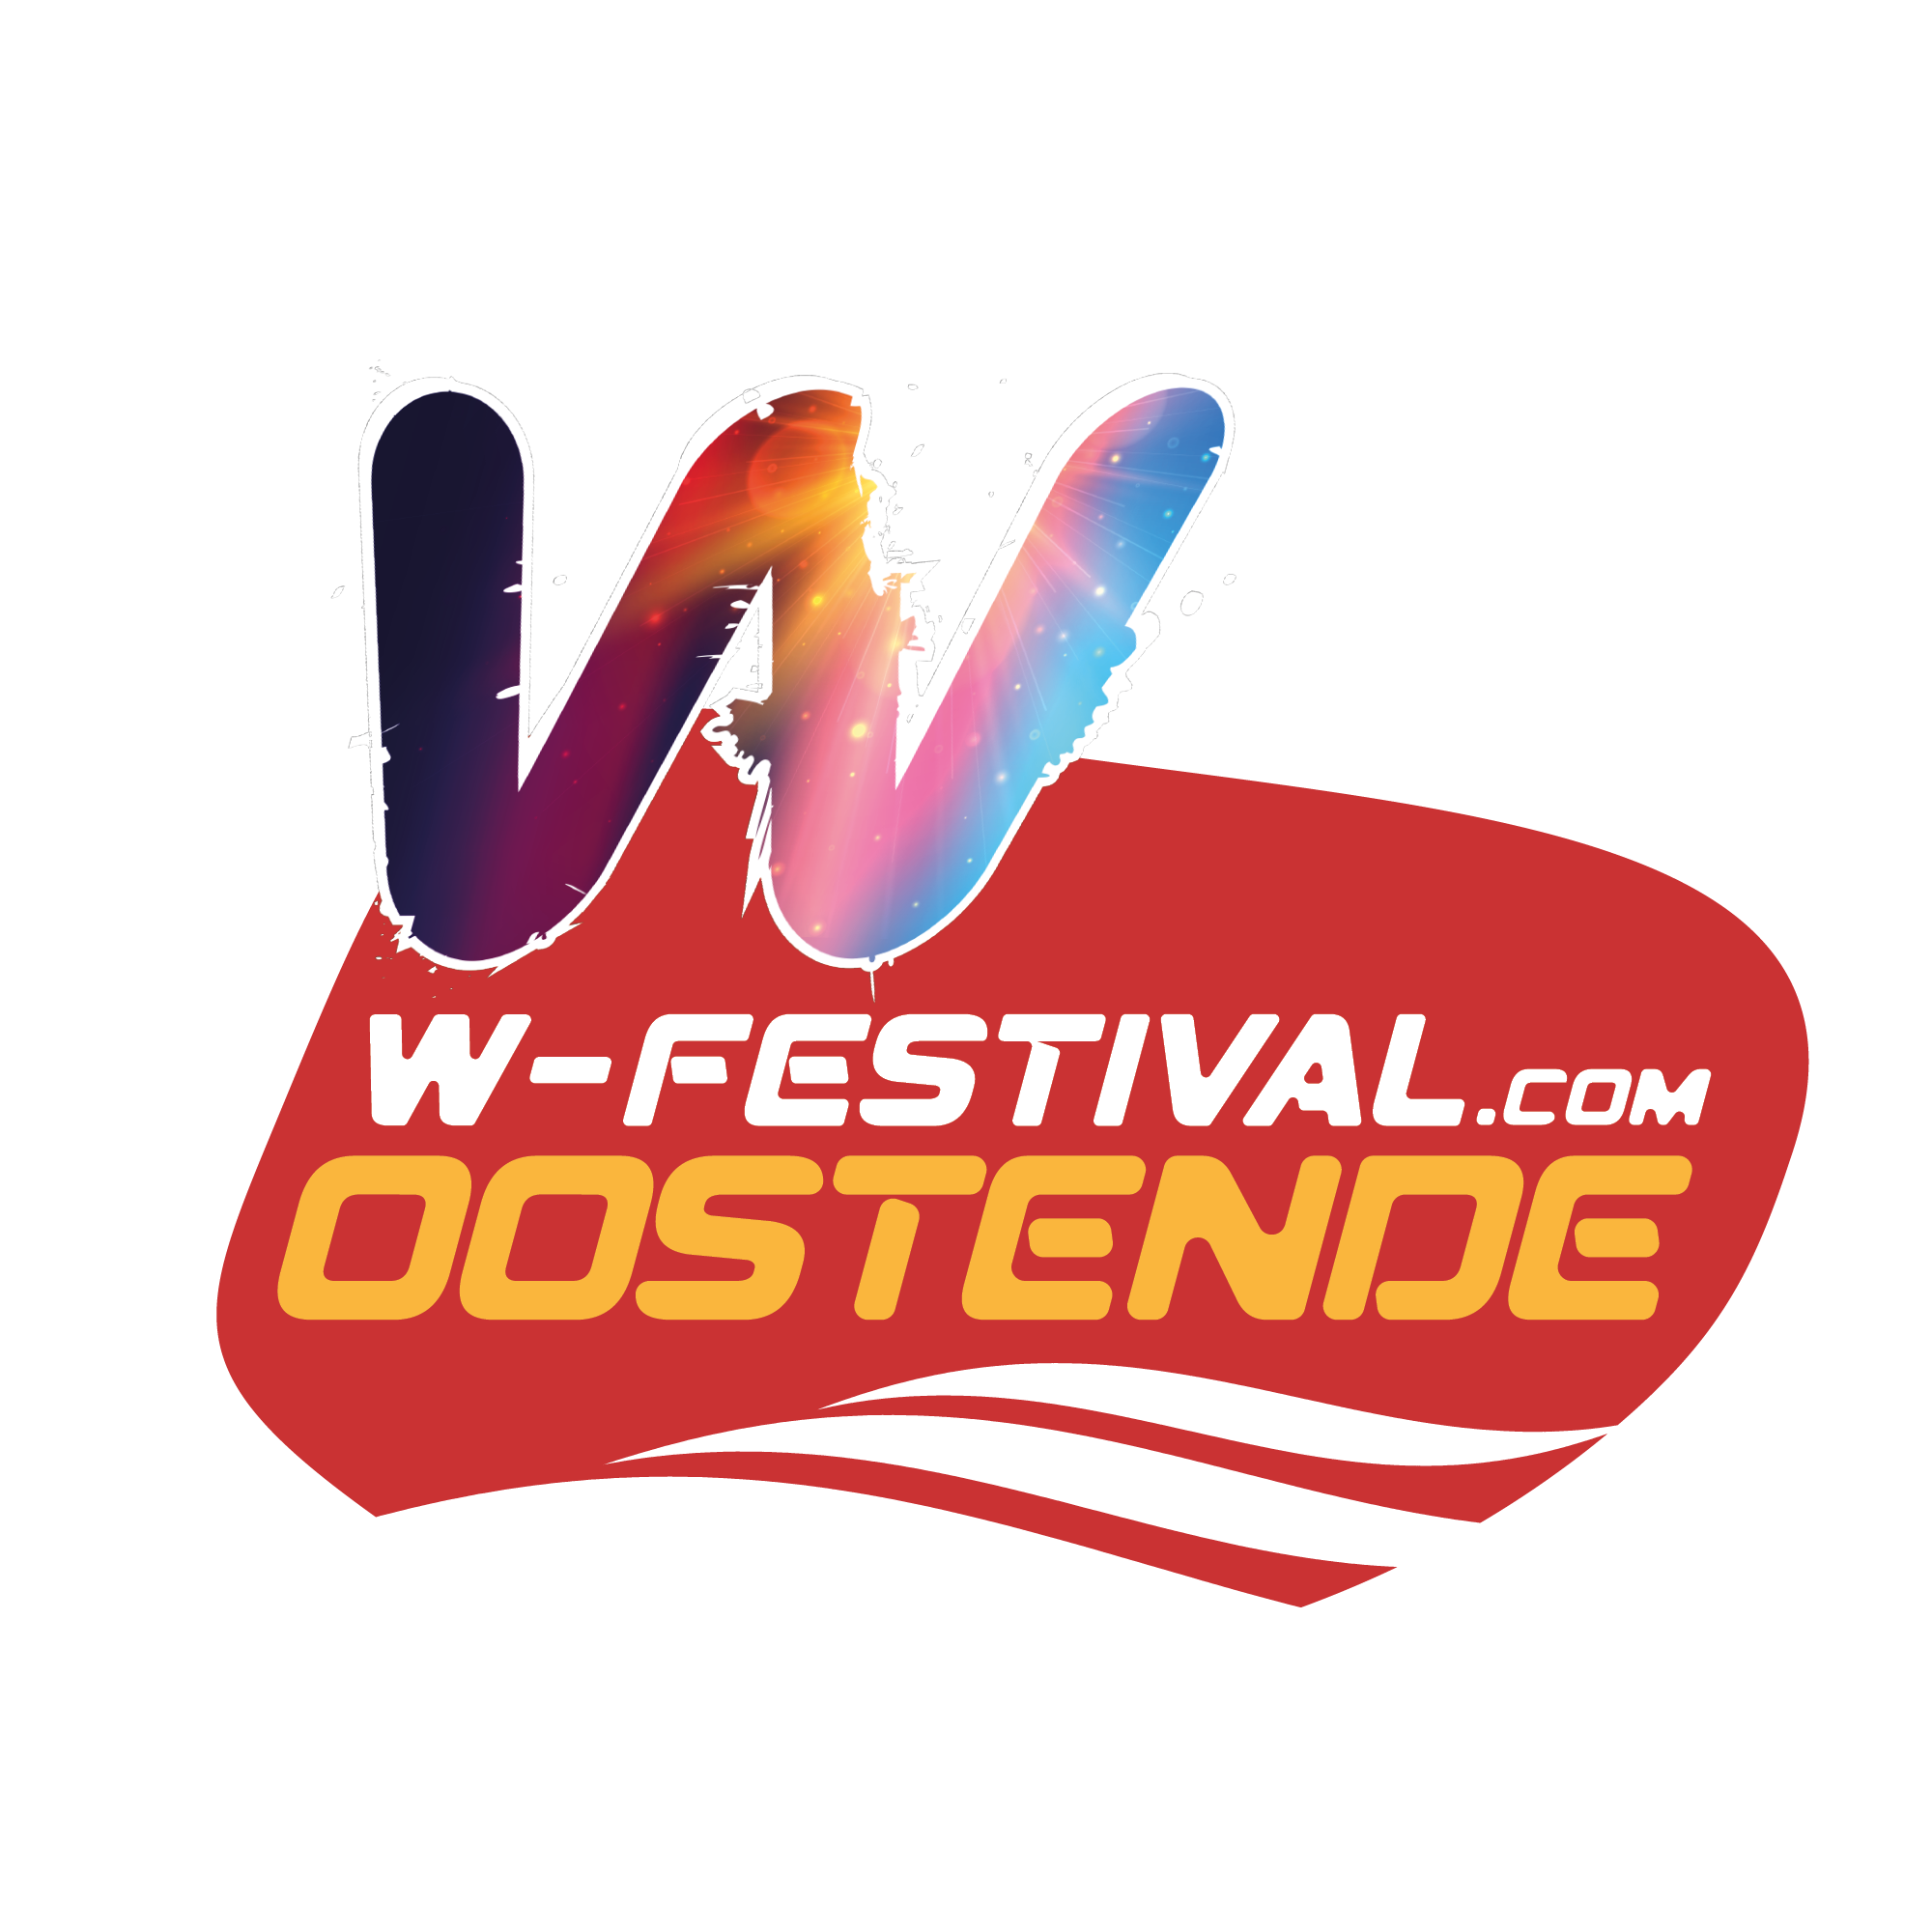 W-Festival Oostende komt met spectaculaire affiche!